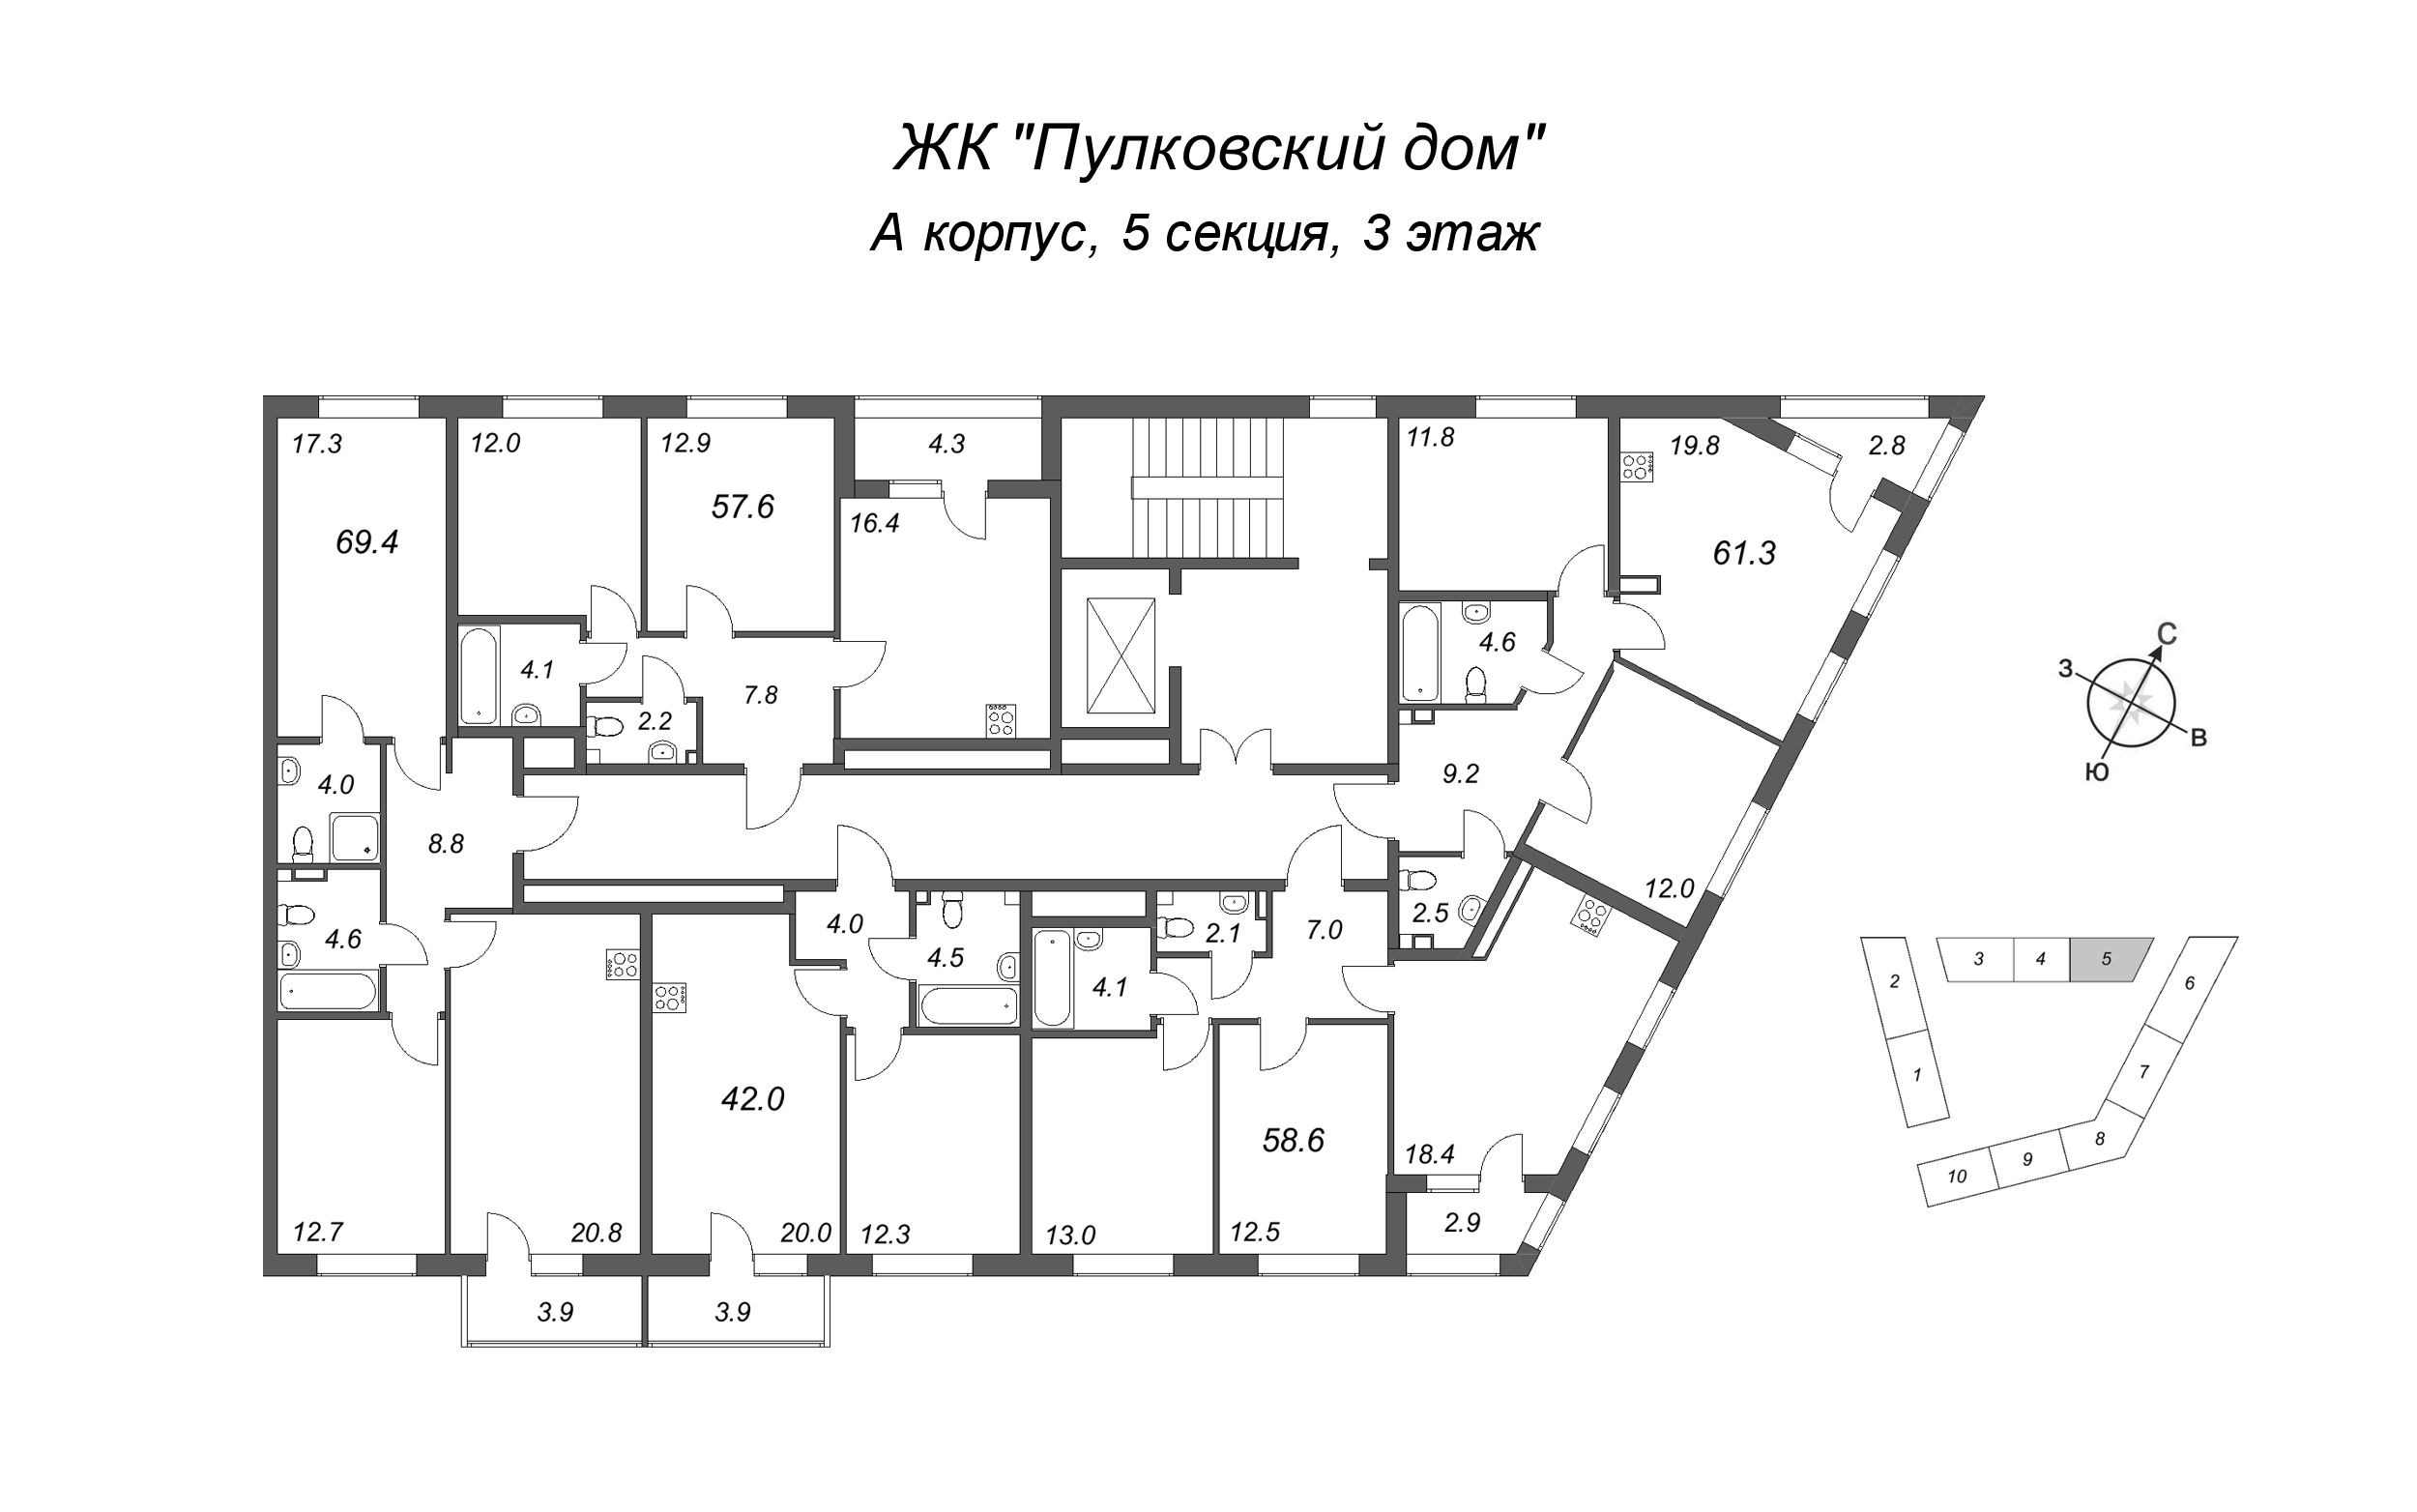 3-комнатная (Евро) квартира, 57.6 м² - планировка этажа